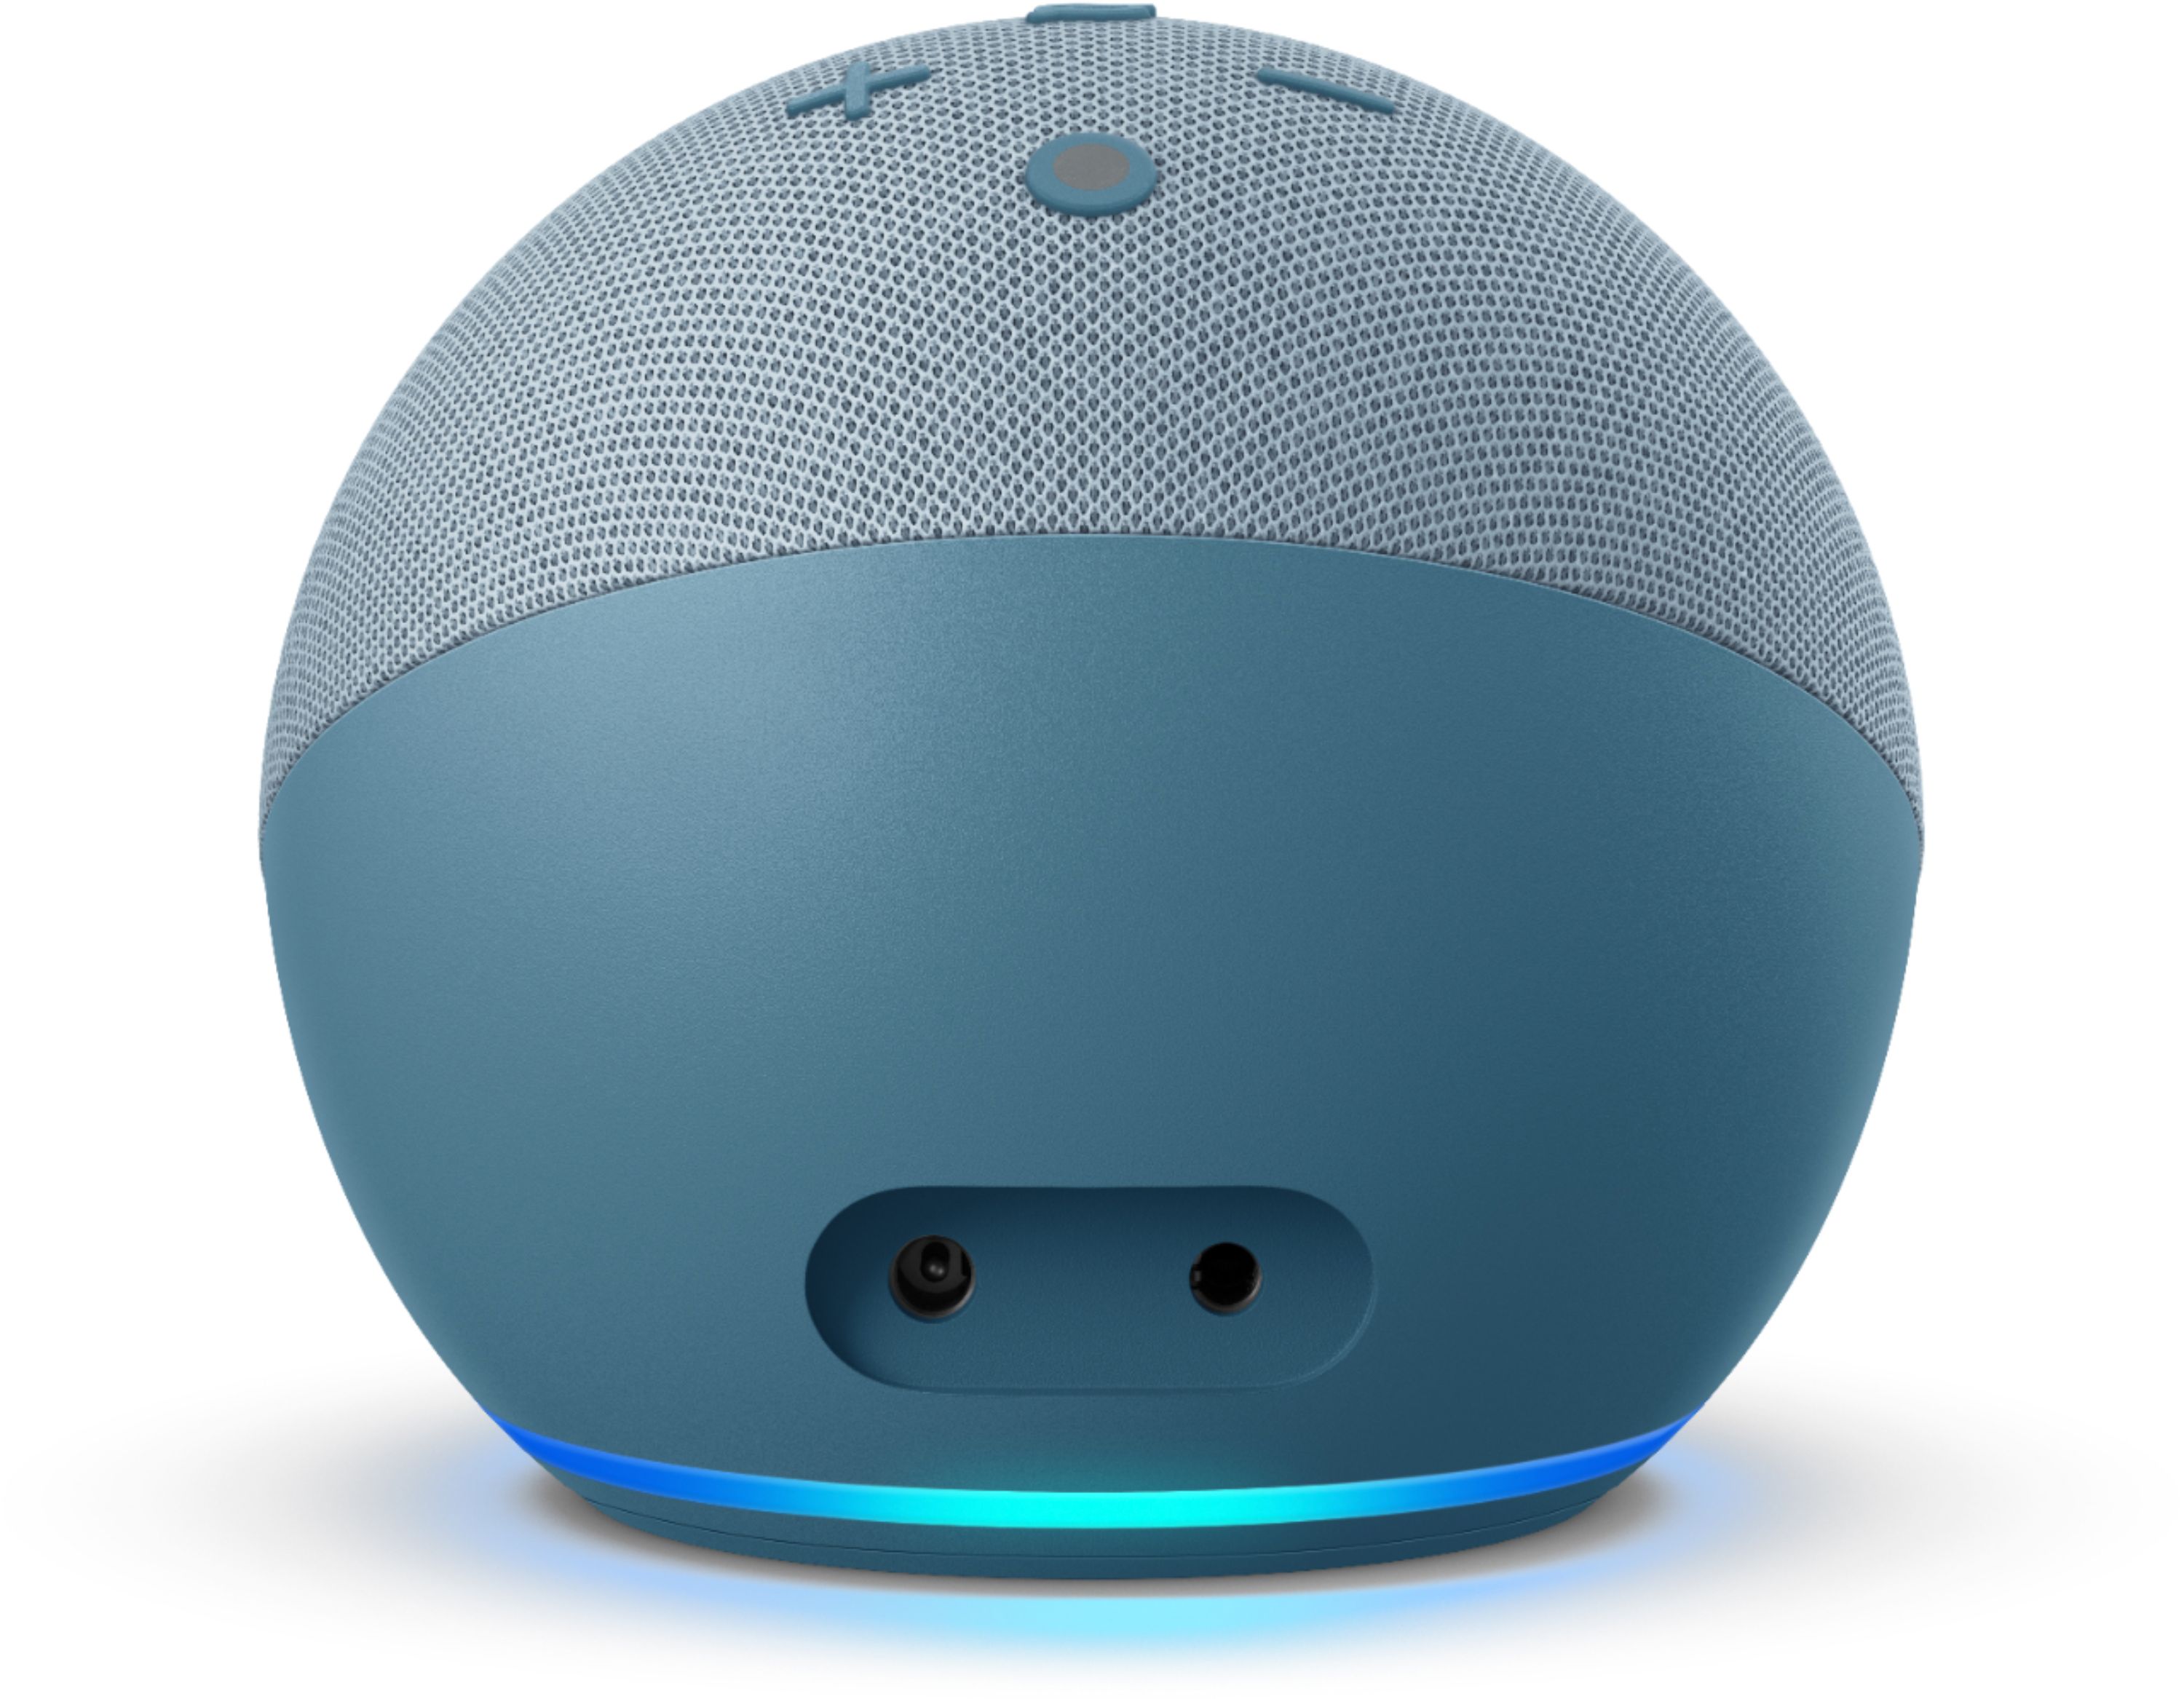 Echo Dot (4th generation) International Version | Smart speaker with Alexa  | Charcoal